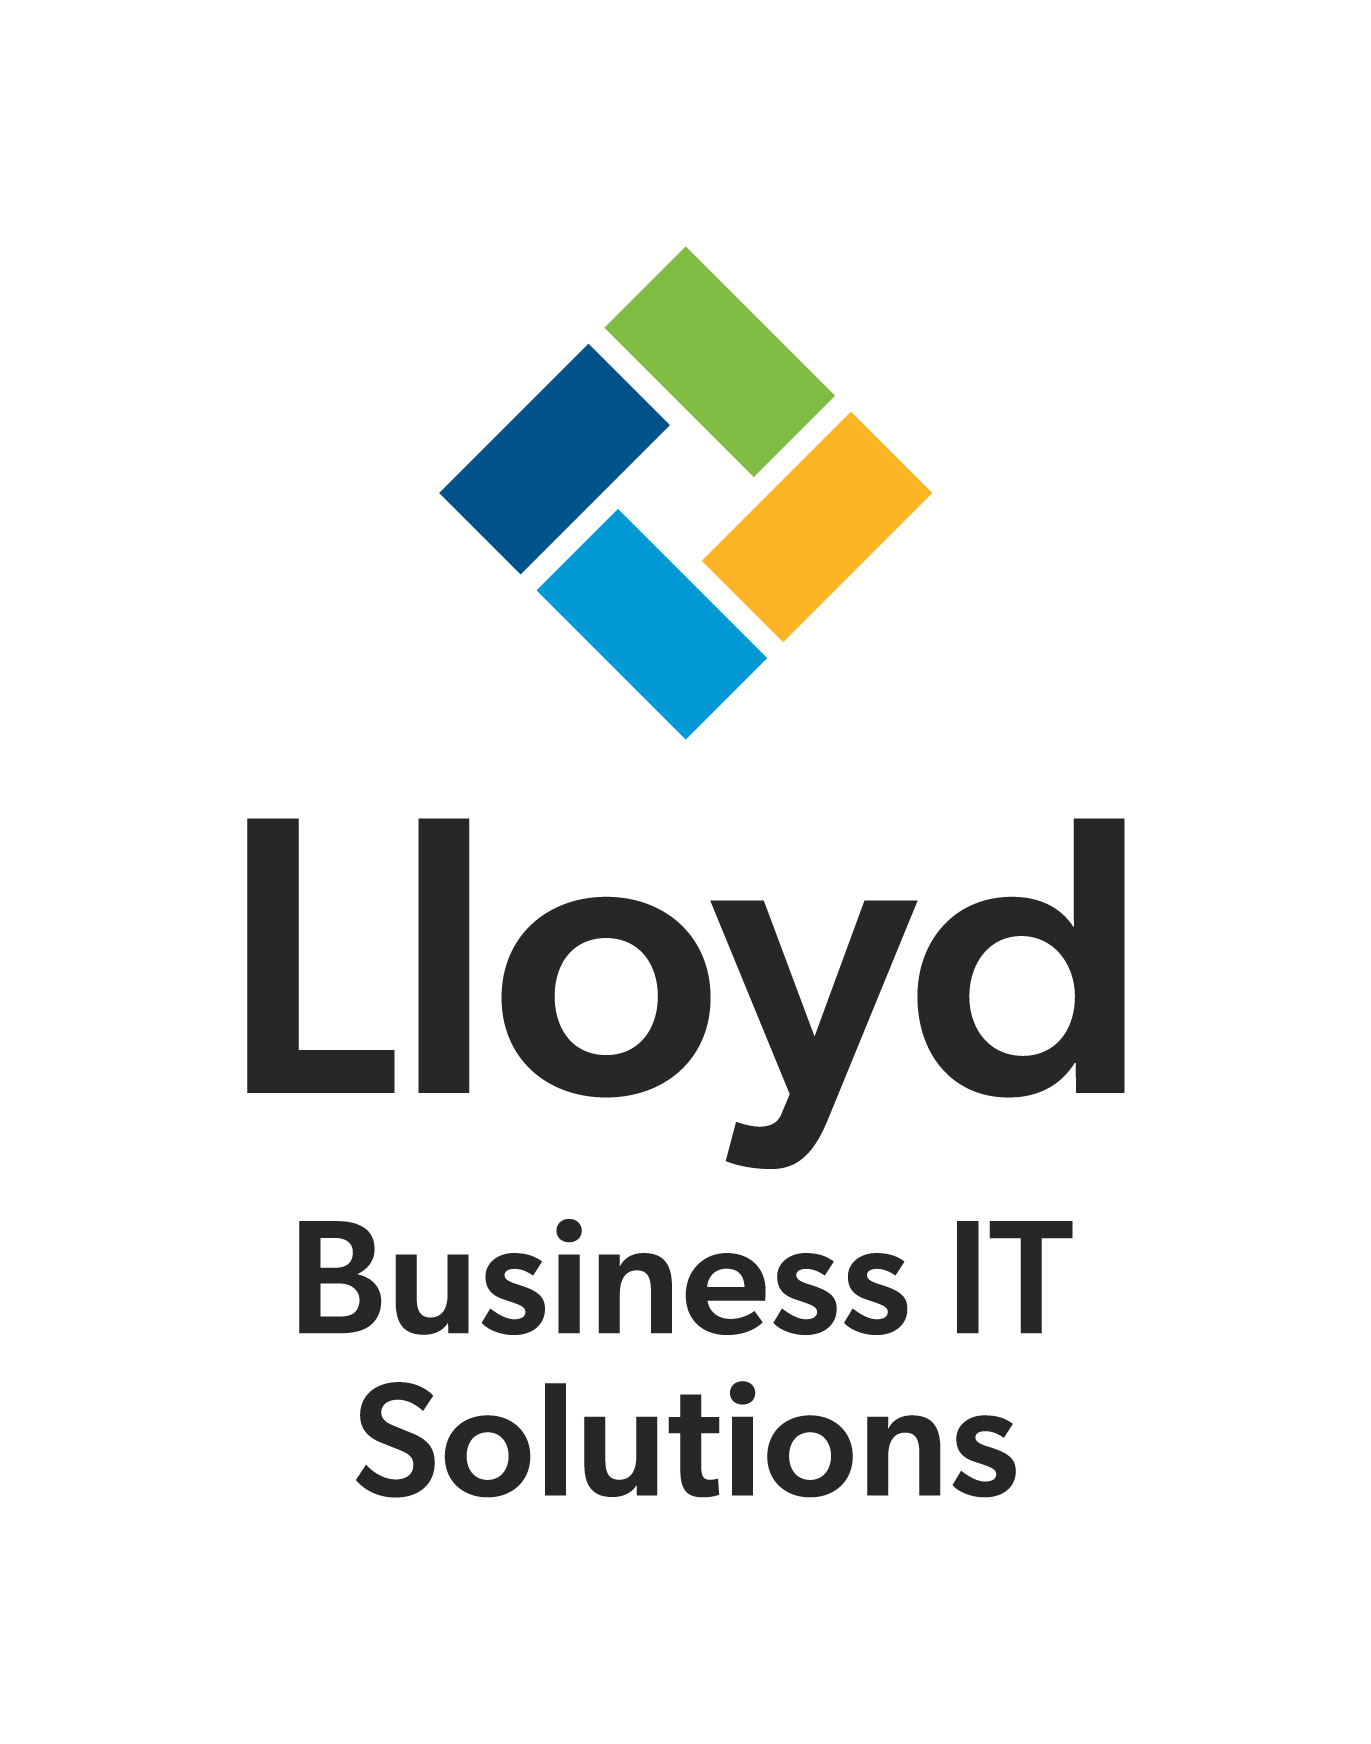 Lloyd Business IT Solutions